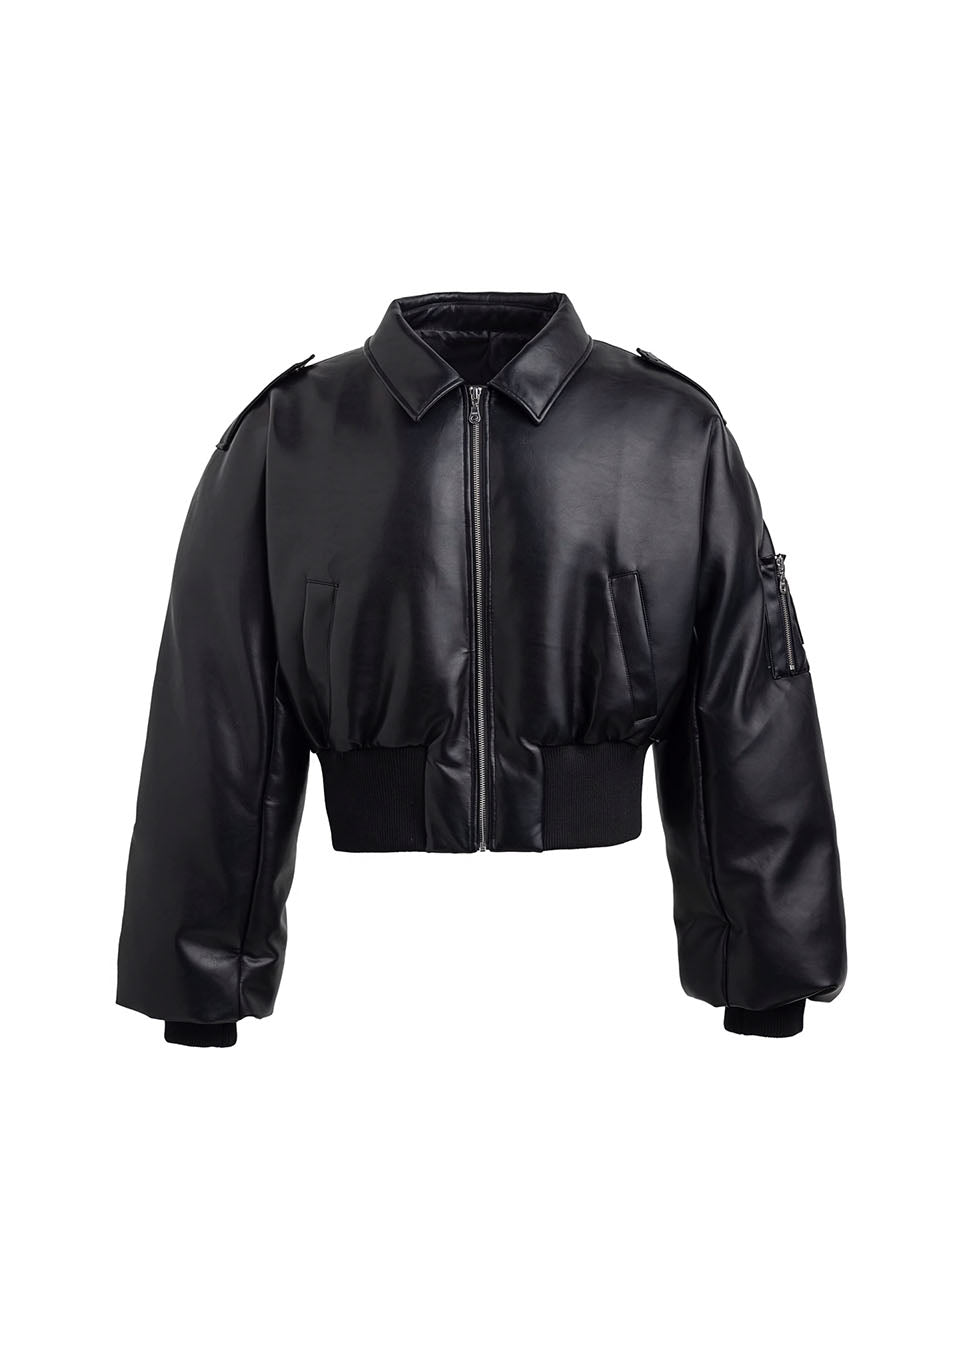 PU leather dark down jacket